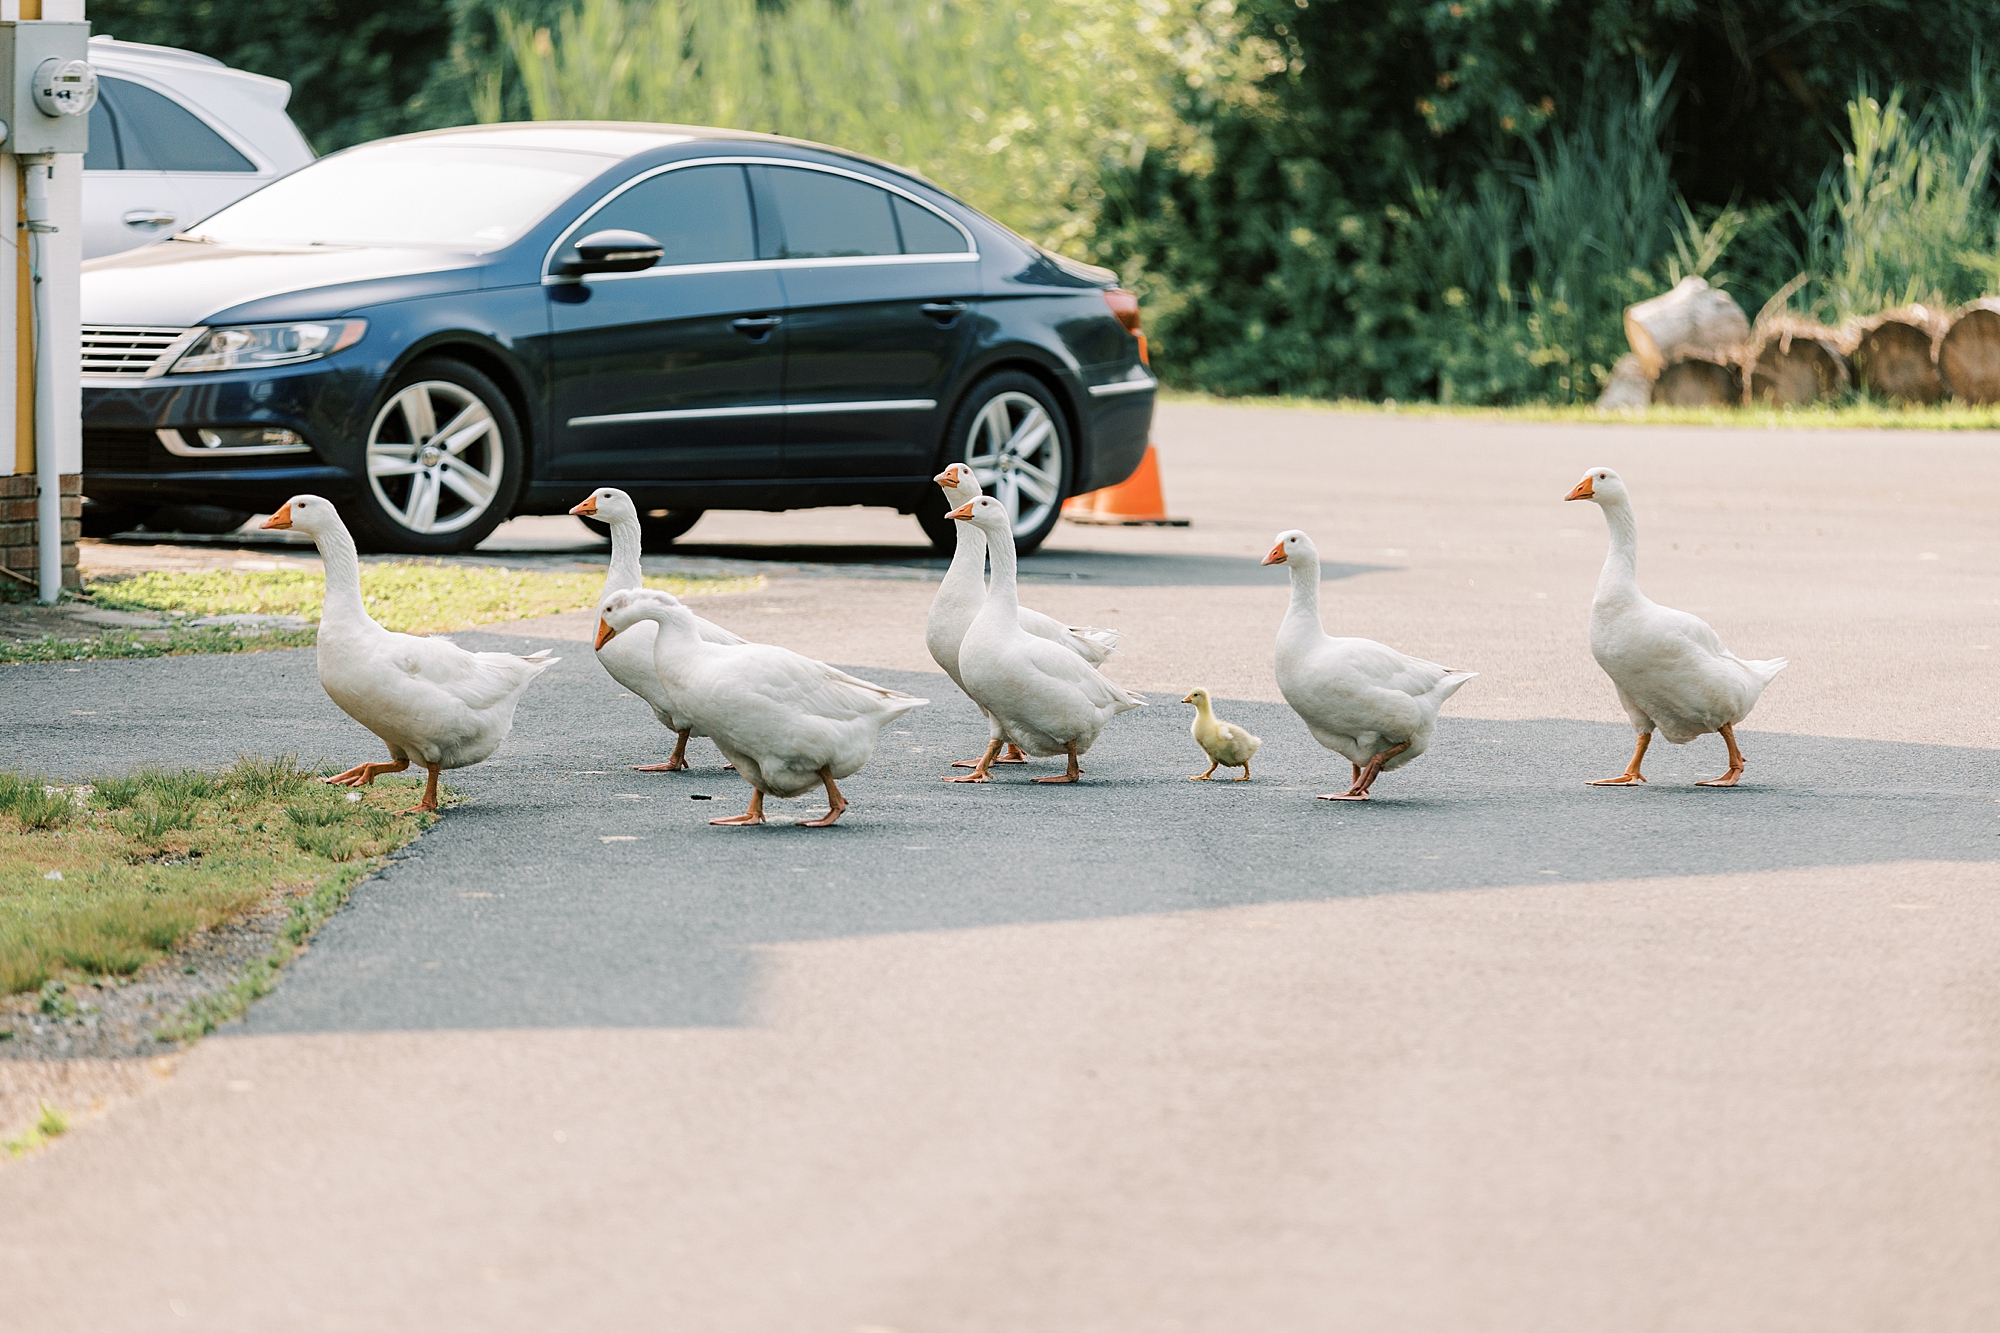 ducks run across parking lot at Willow Creek Winery